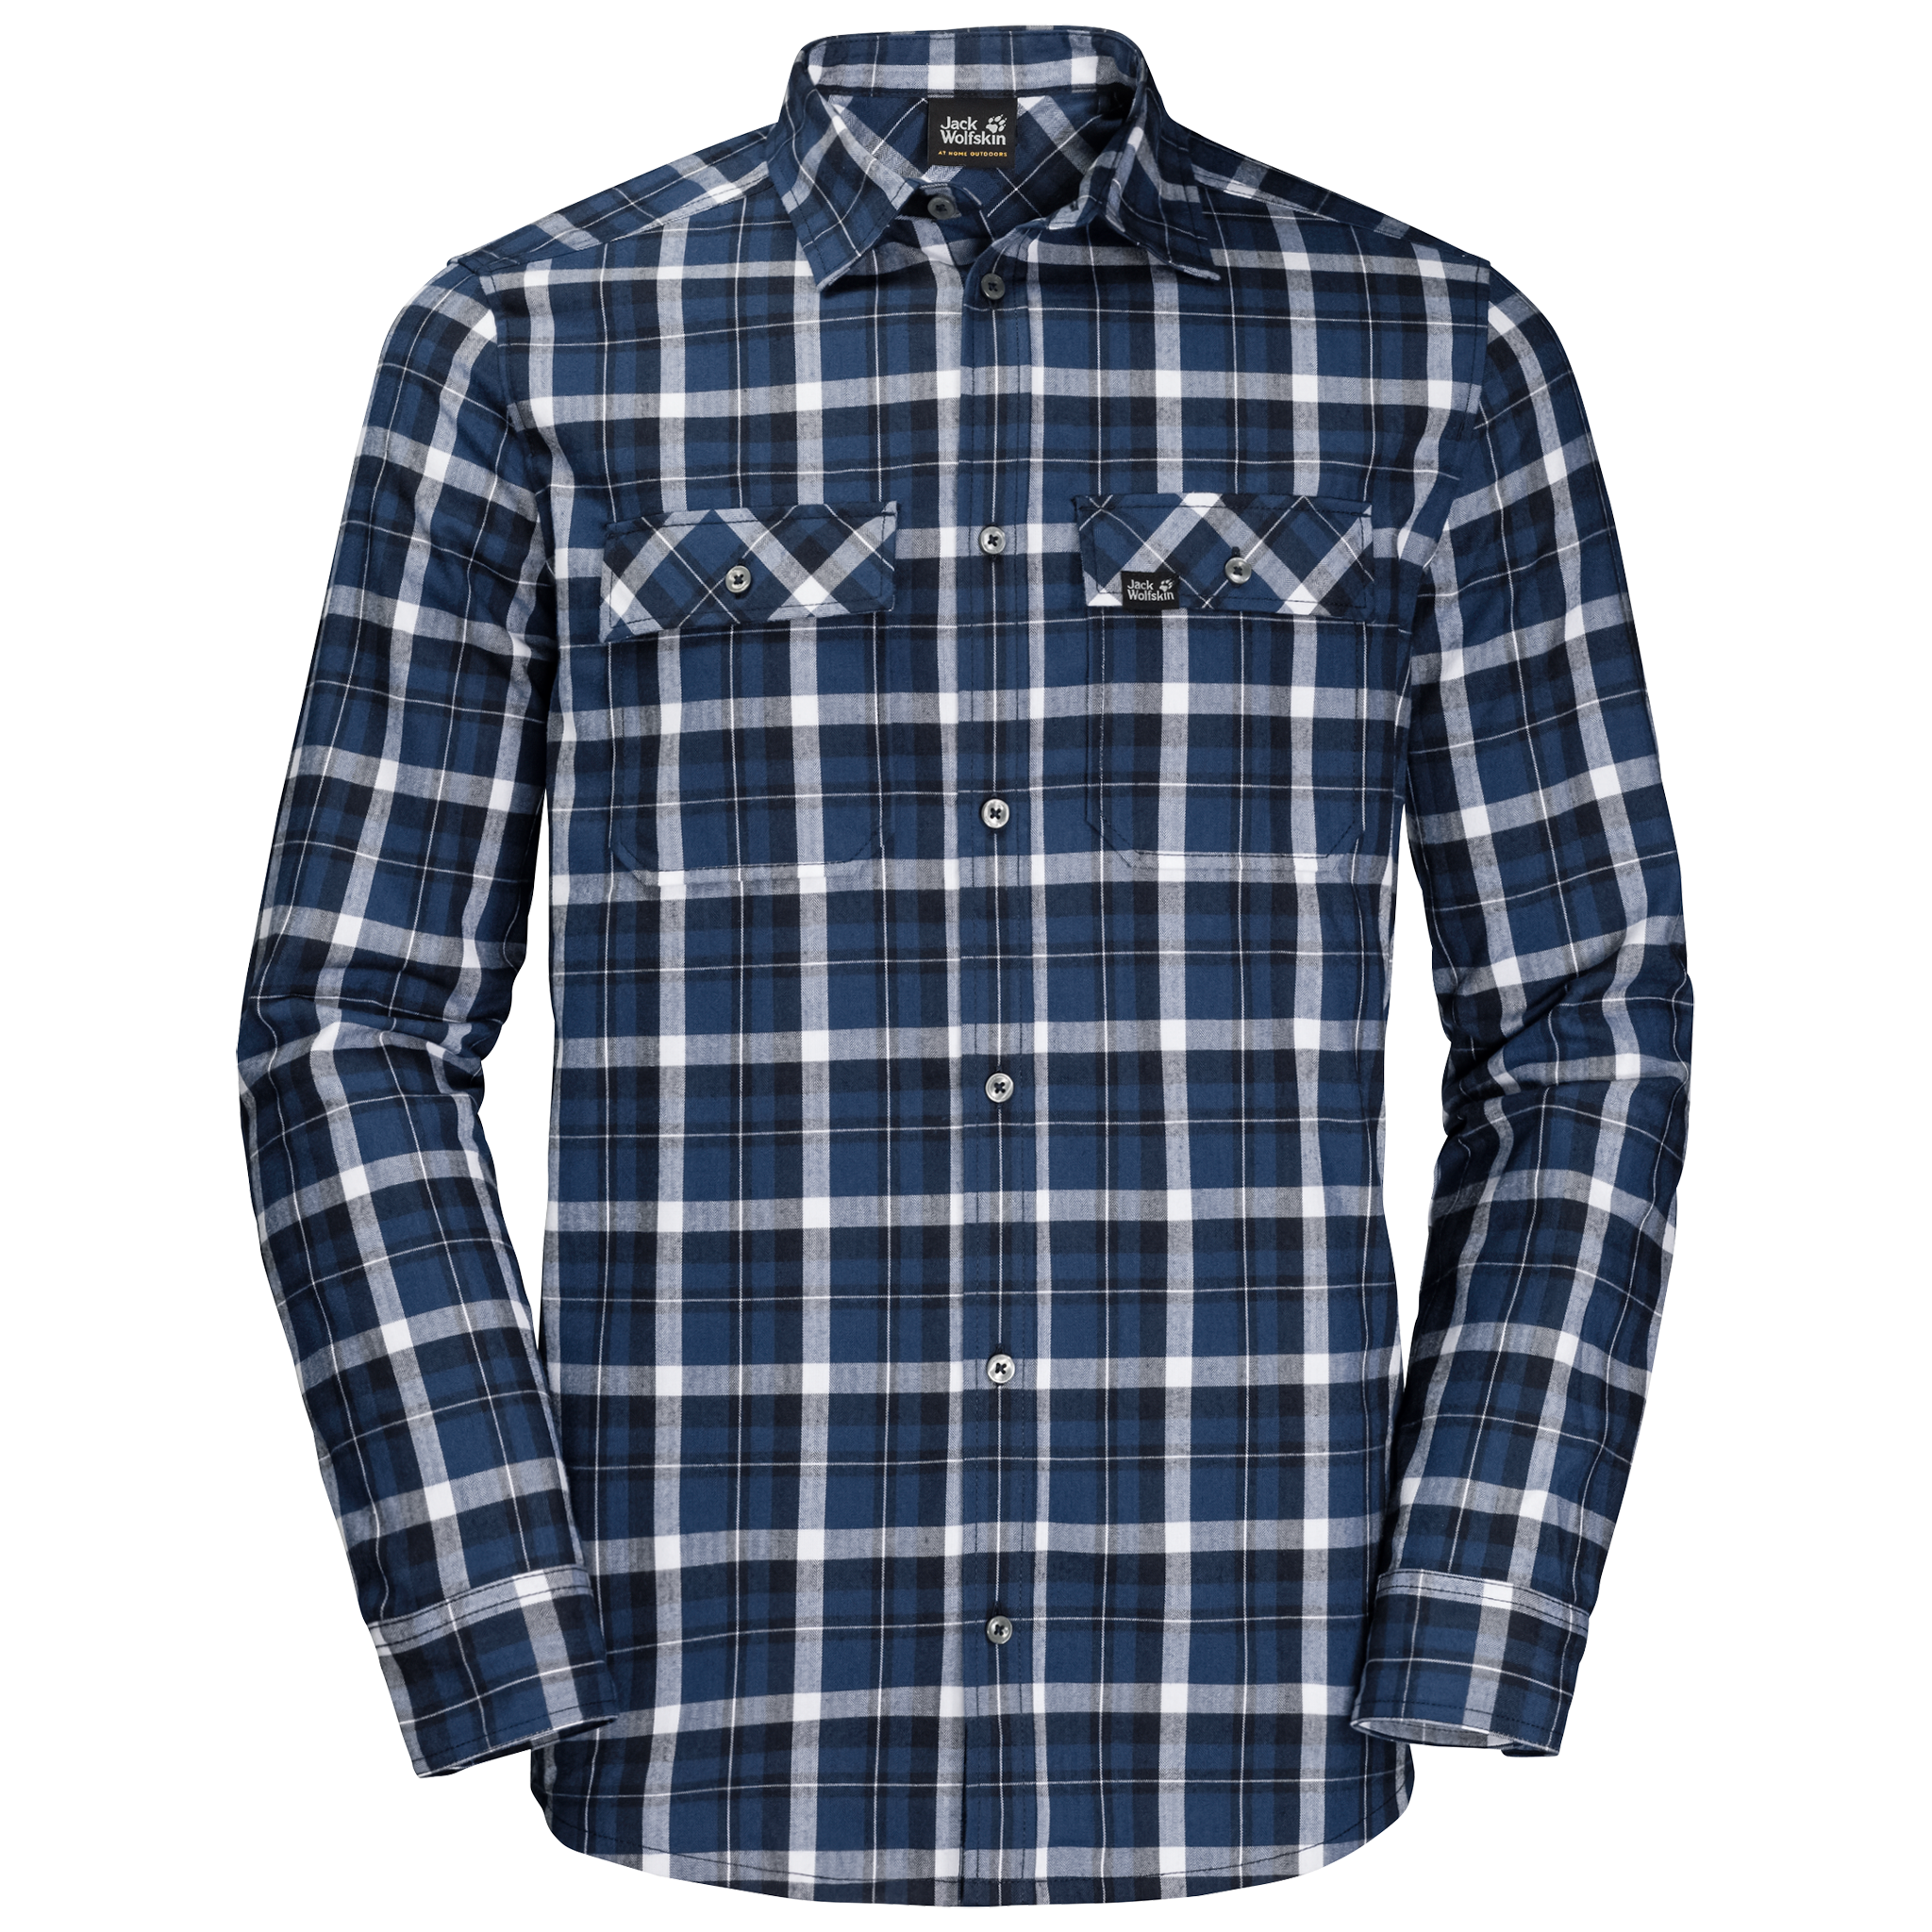 Night Blue Checks Flannel Shirt Men